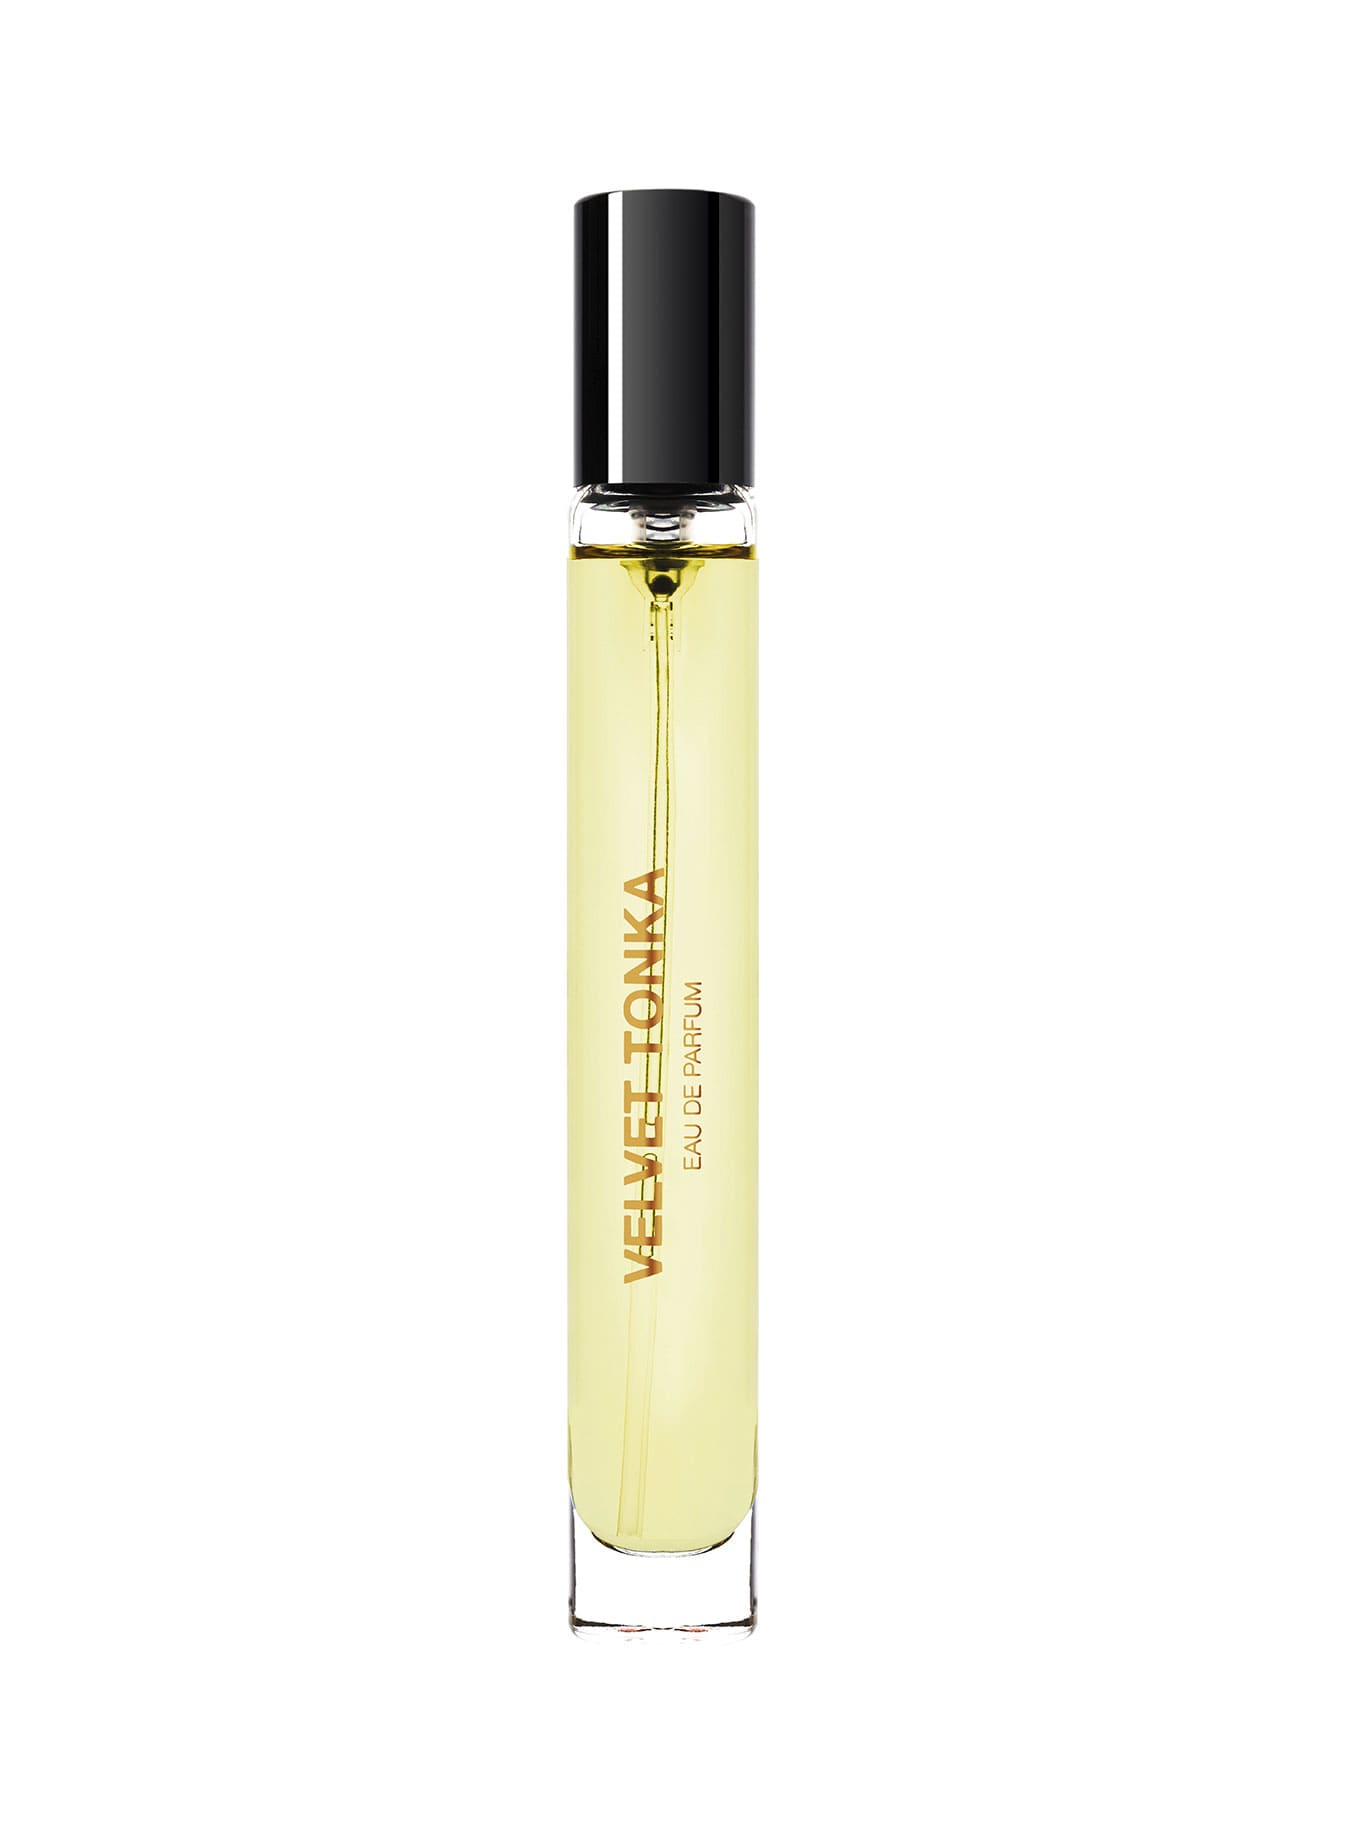 Frasco de perfume Velvet Tonka de BDK en formato de 10 ml, ideal para llevar en viajes.